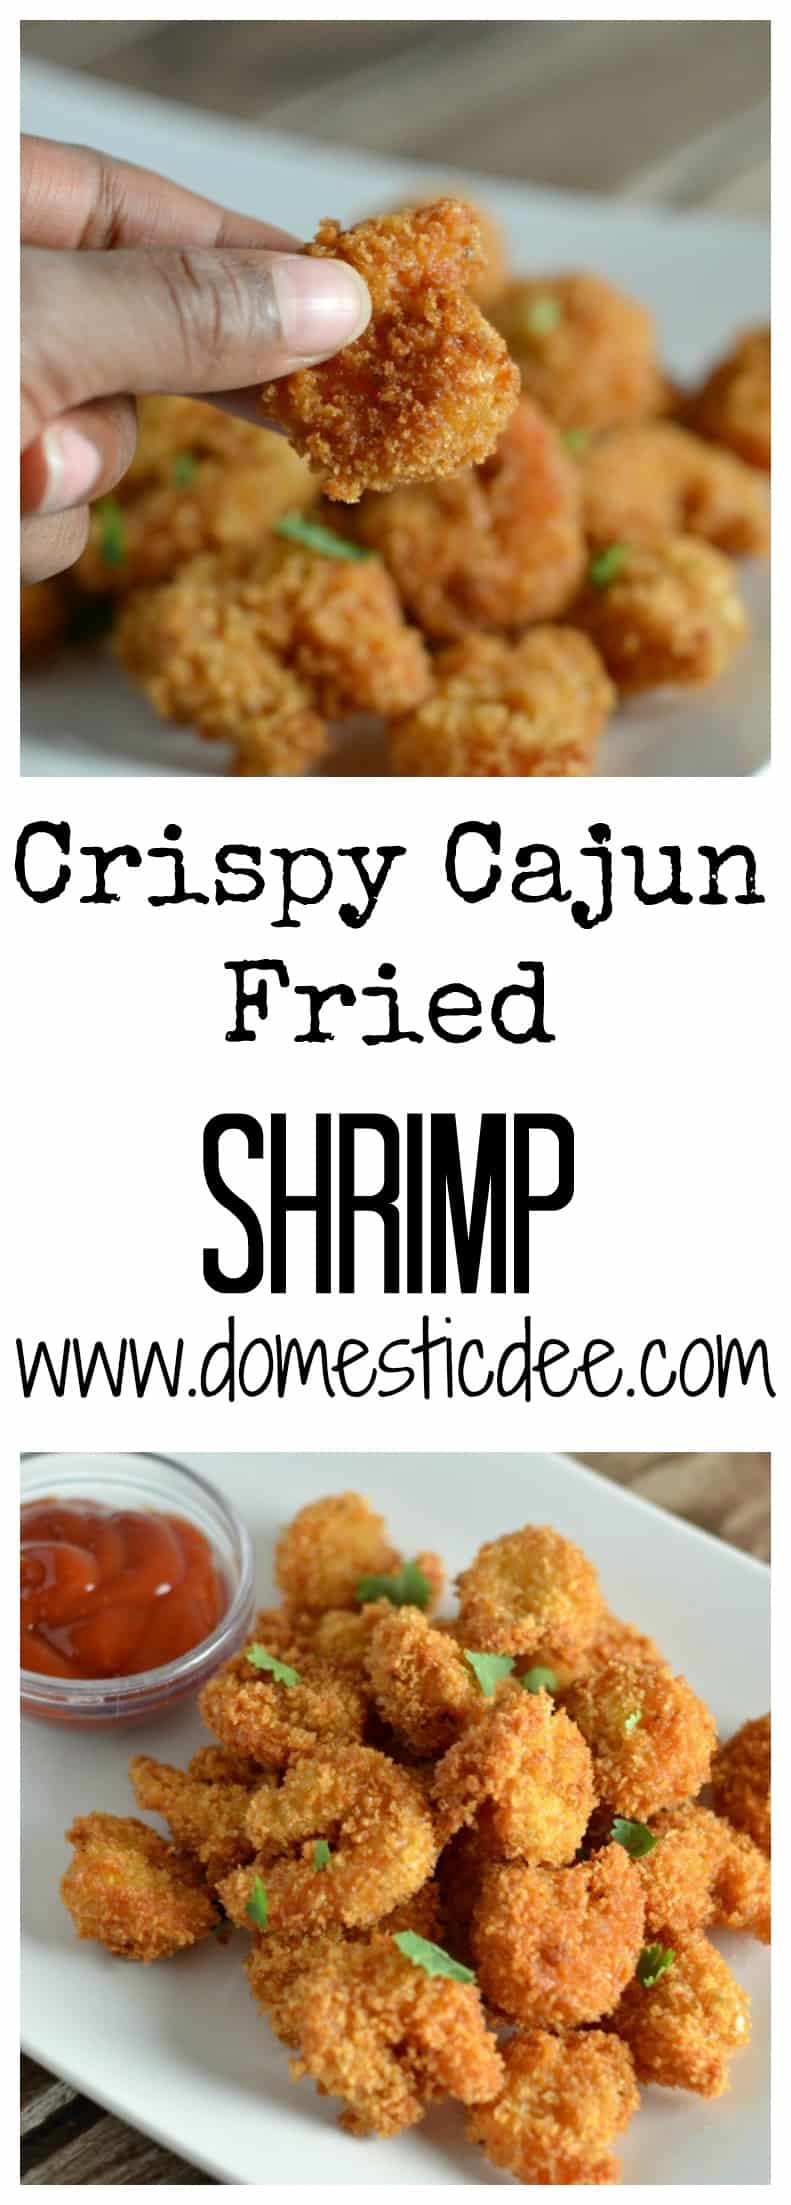 Crispy Cajun Fried Shrimp- This shrimp is moist, juicy and crunchy. www.domesticdee.com